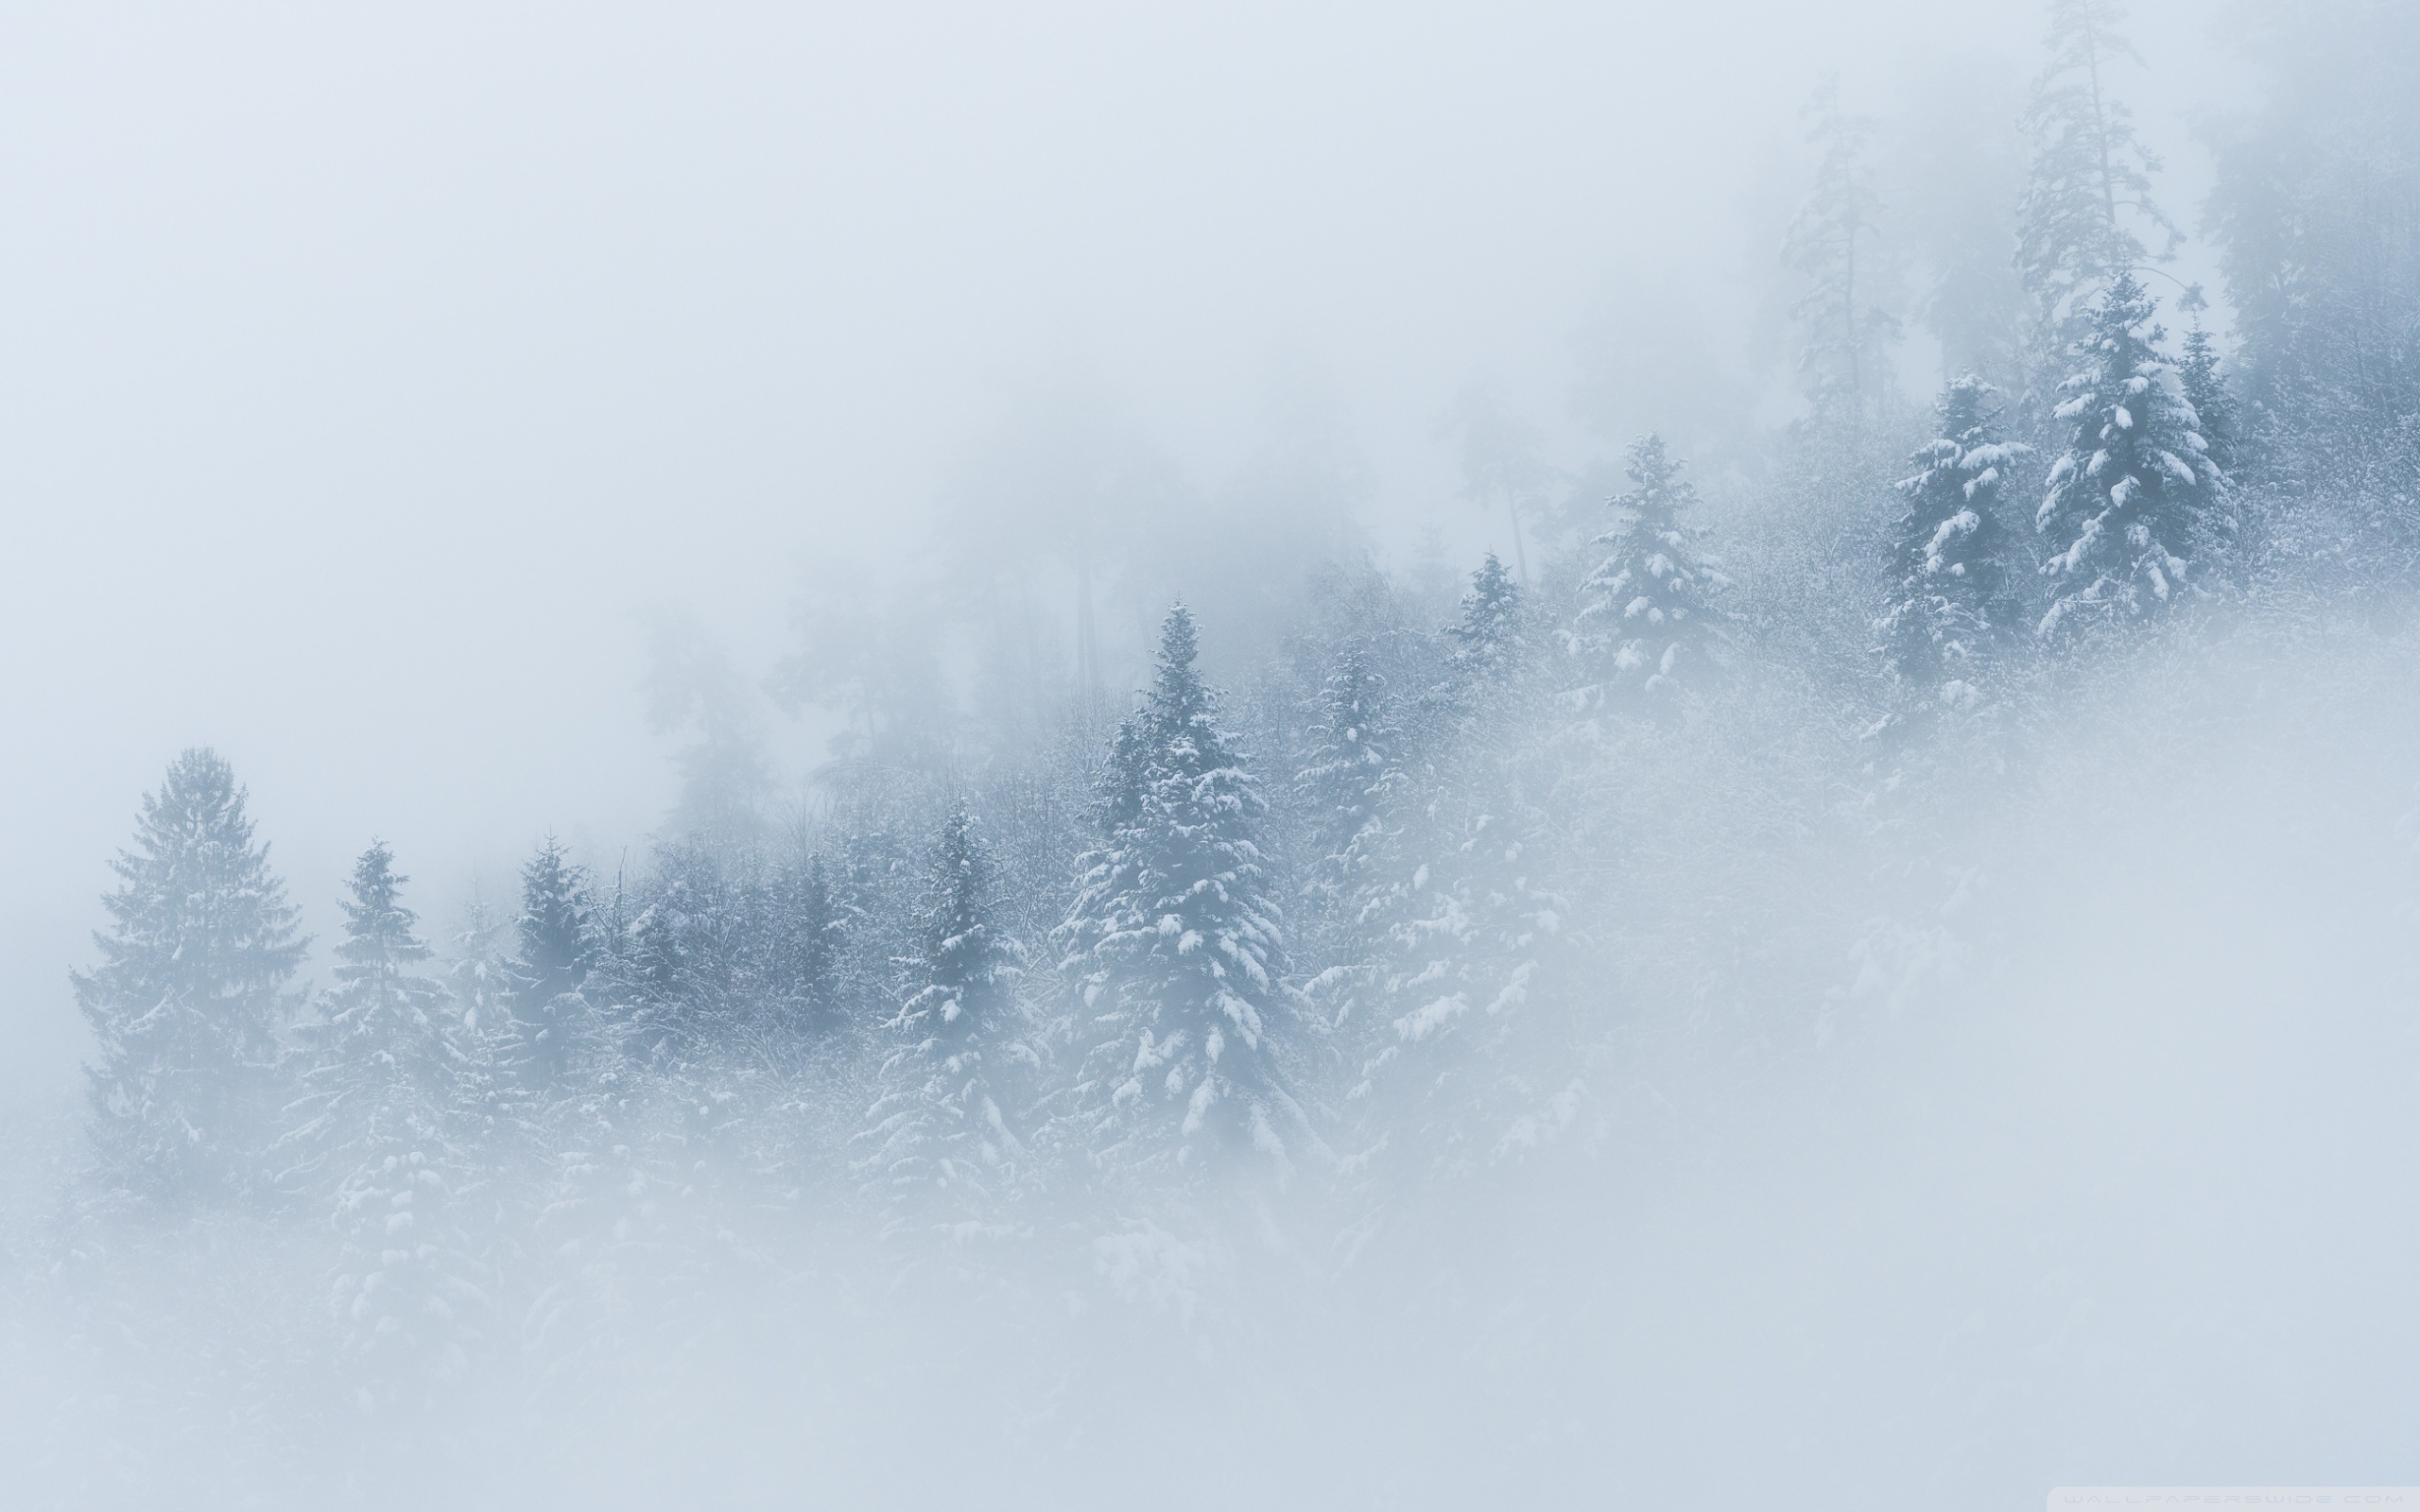 Mountain Forest Landscape, Fog, Winter Ultra HD Desktop Background Wallpaper for 4K UHD TV, Widescreen & UltraWide Desktop & Laptop, Multi Display, Dual Monitor, Tablet